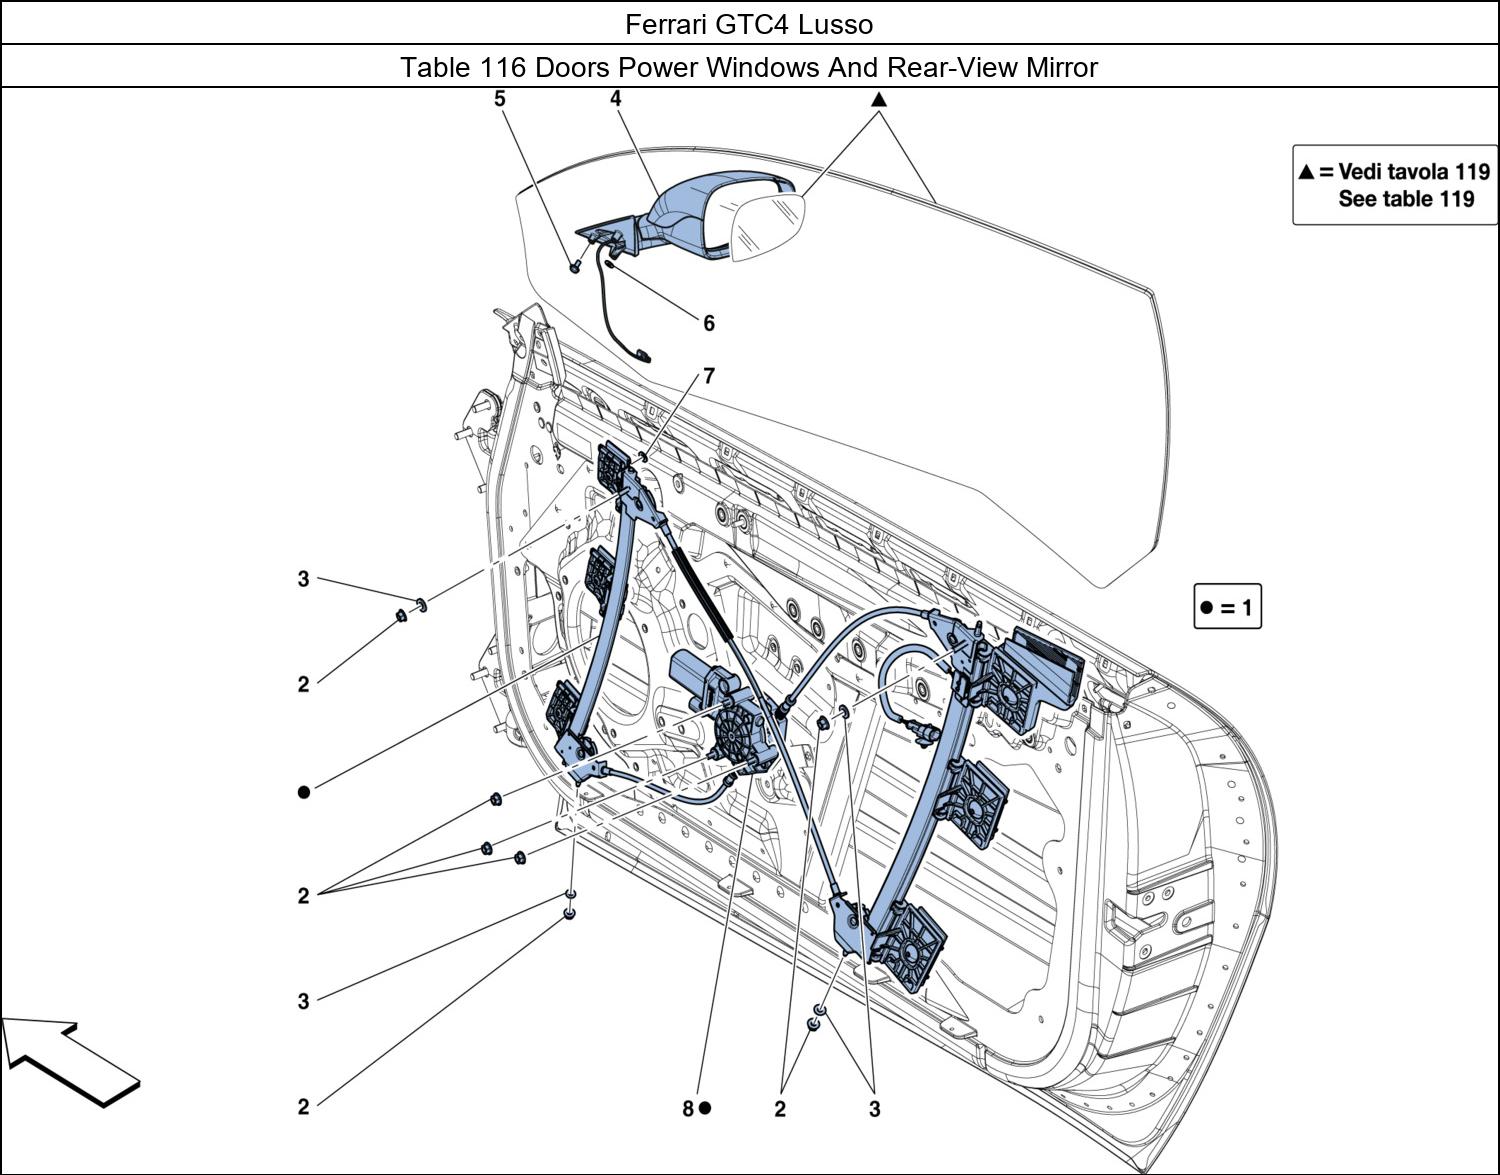 Ferrari Parts Ferrari GTC4 Lusso Table 116 Doors Power Windows And Rear-View Mirror